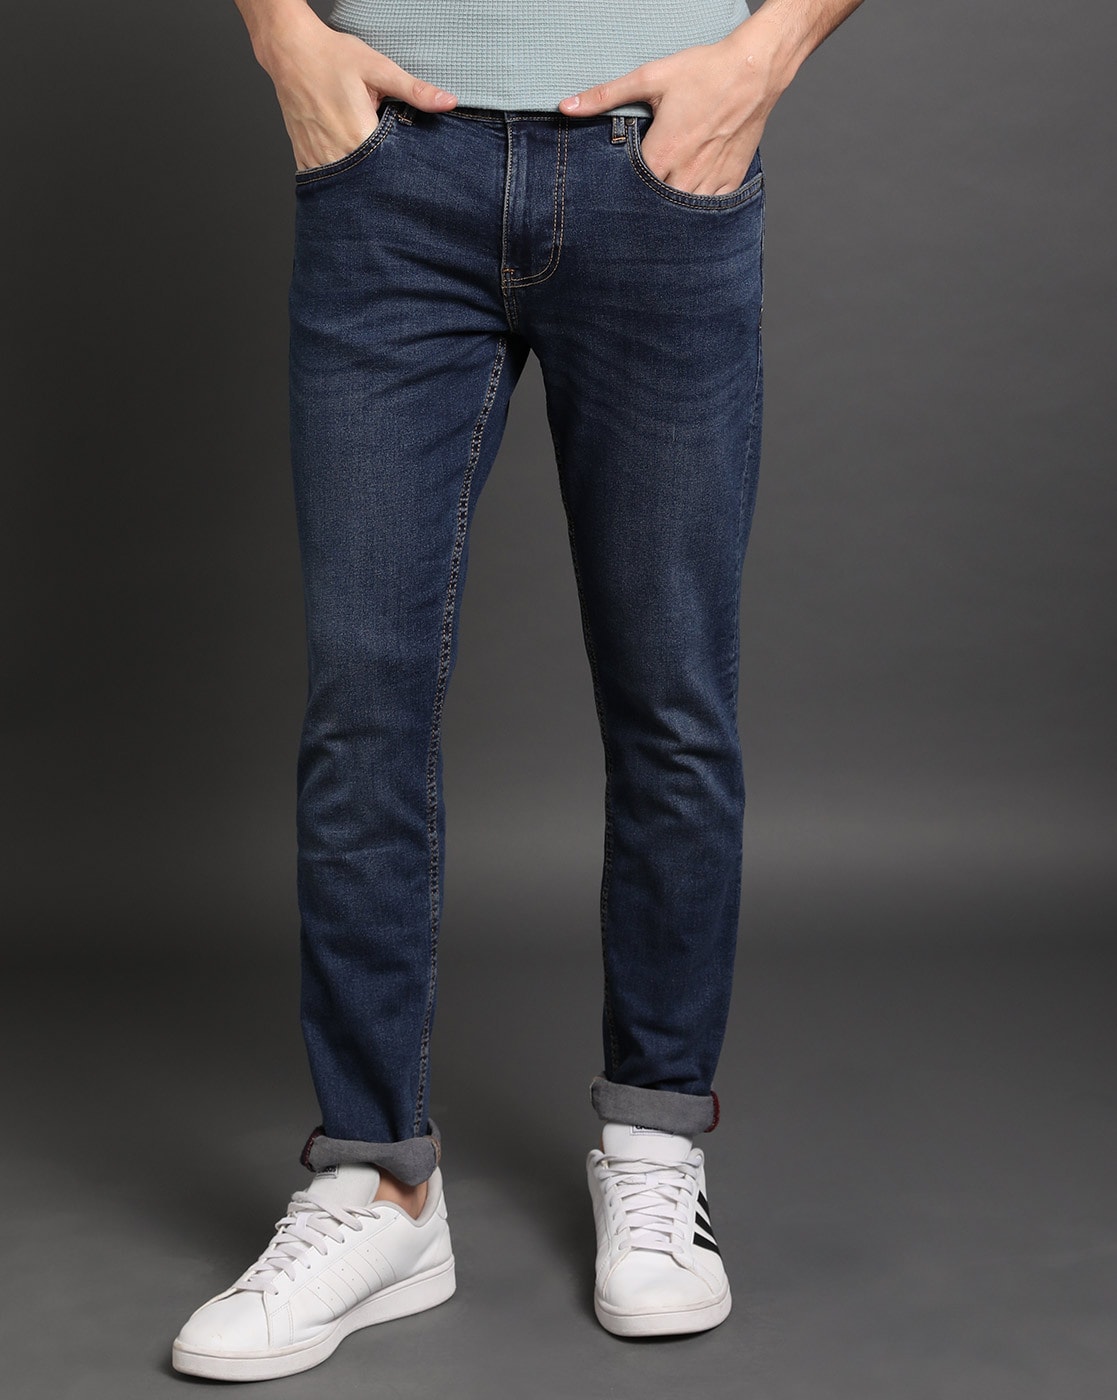 Sky Blue Men's Jeans Pants | Fashion Sky Blue Jeans | Slim Jeans Jeans | Denim  Trousers - Jeans - Aliexpress